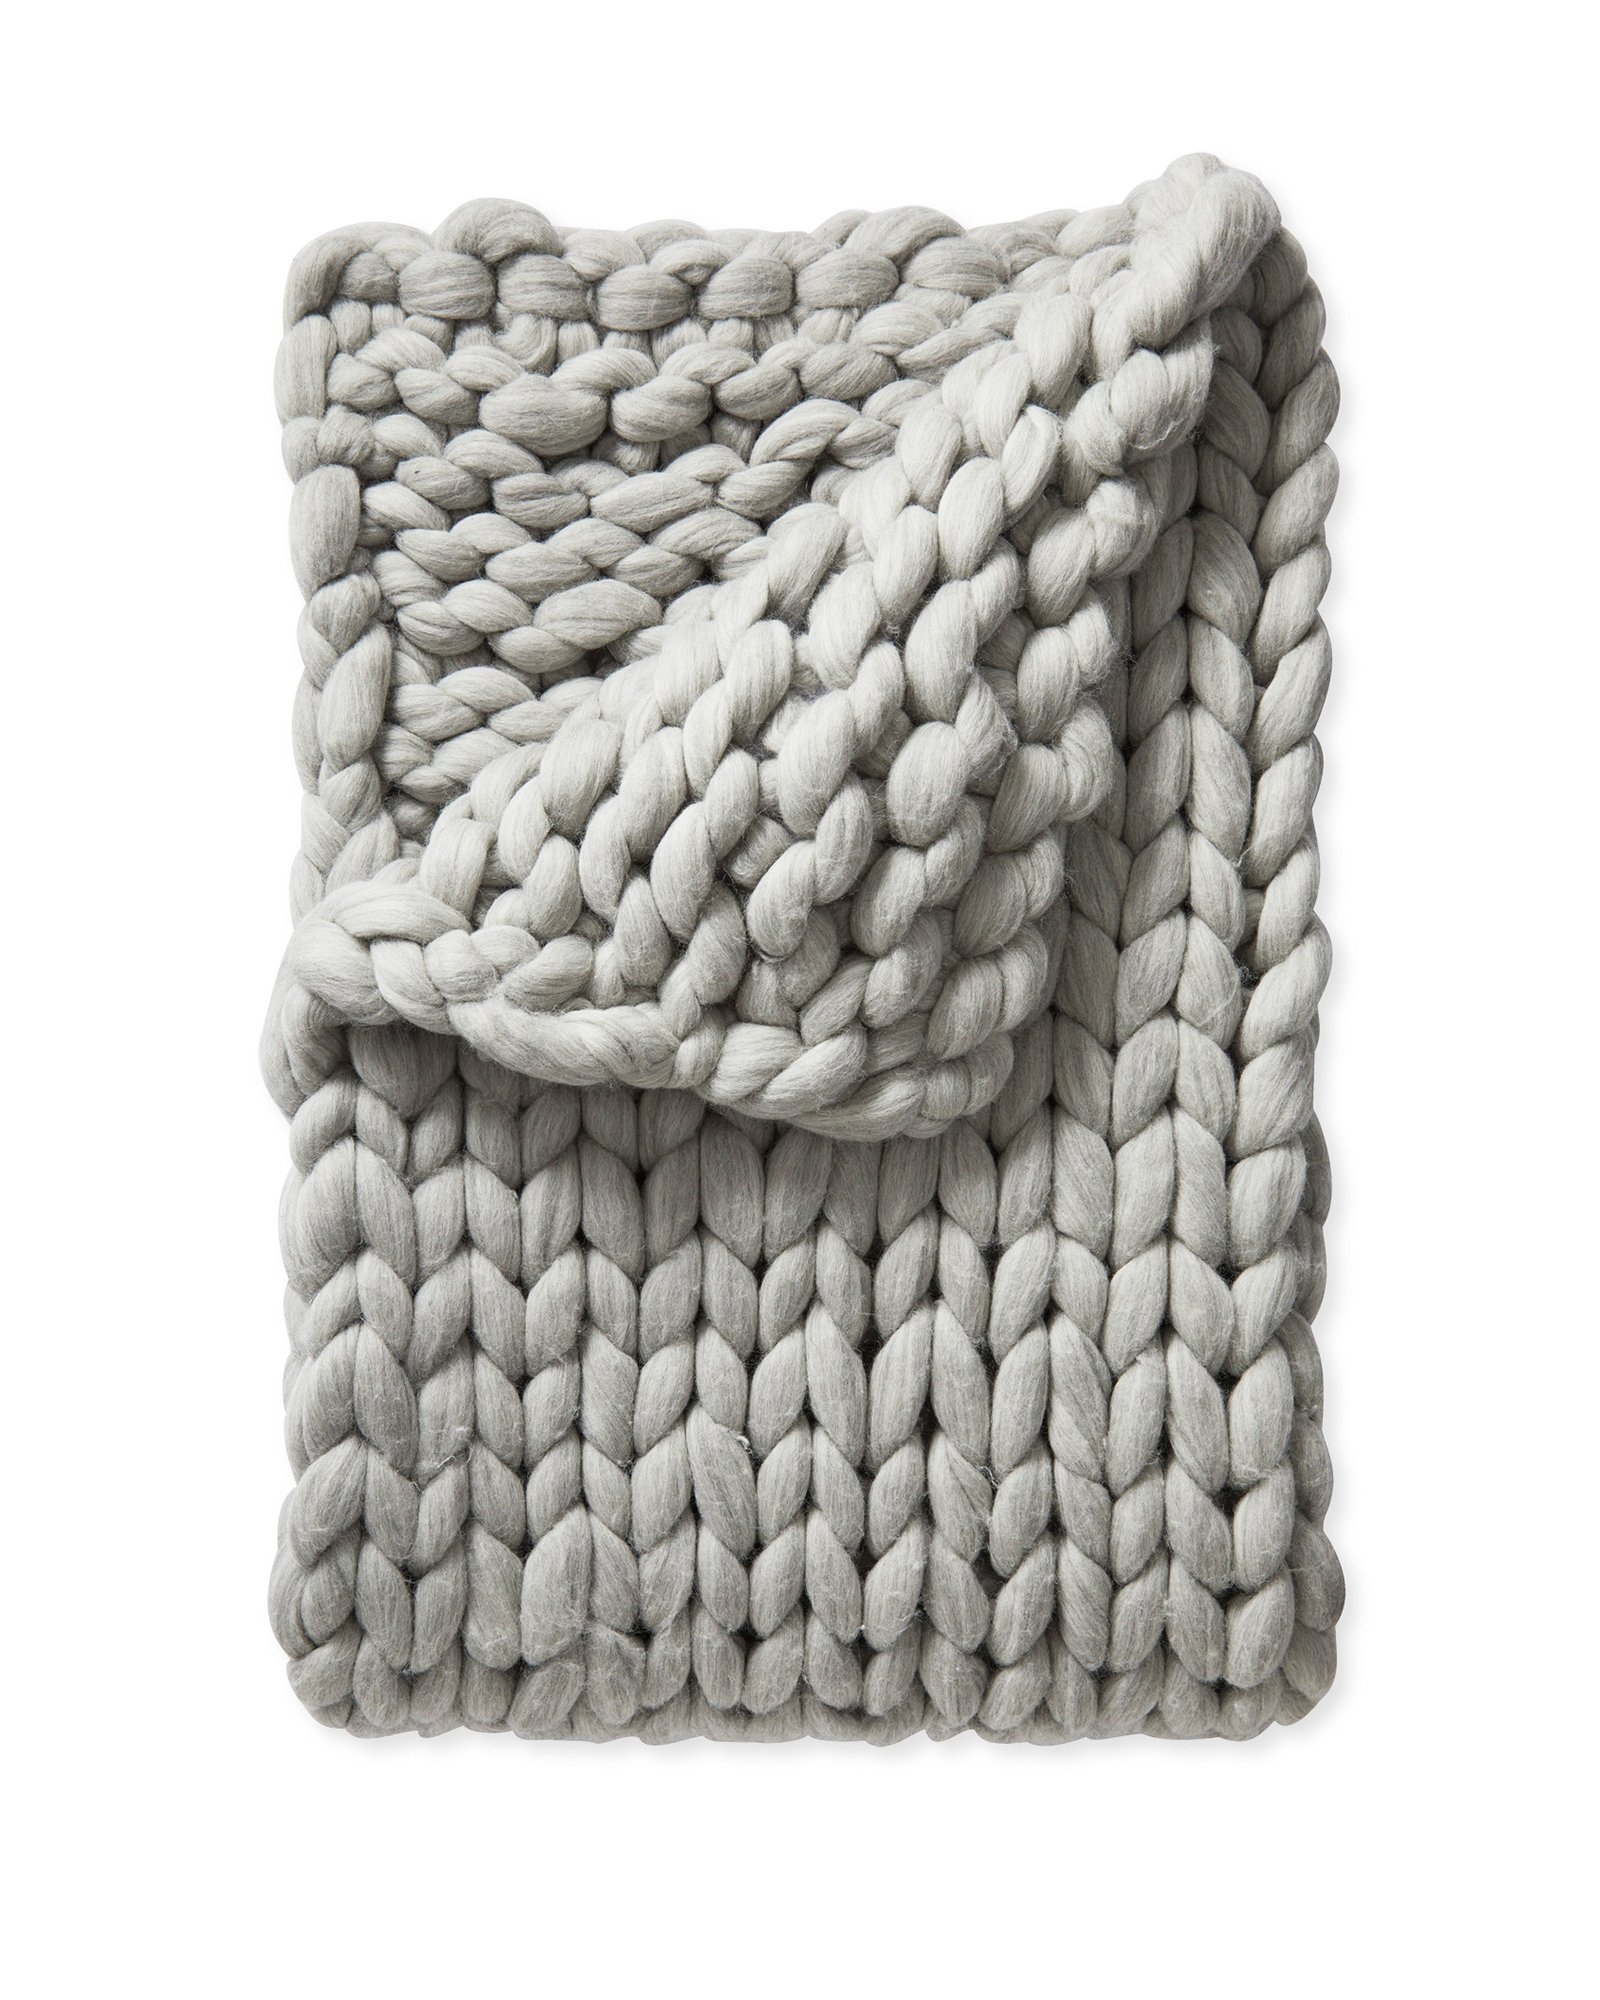 Henley Wool Throw - Heathered Grey - Image 0